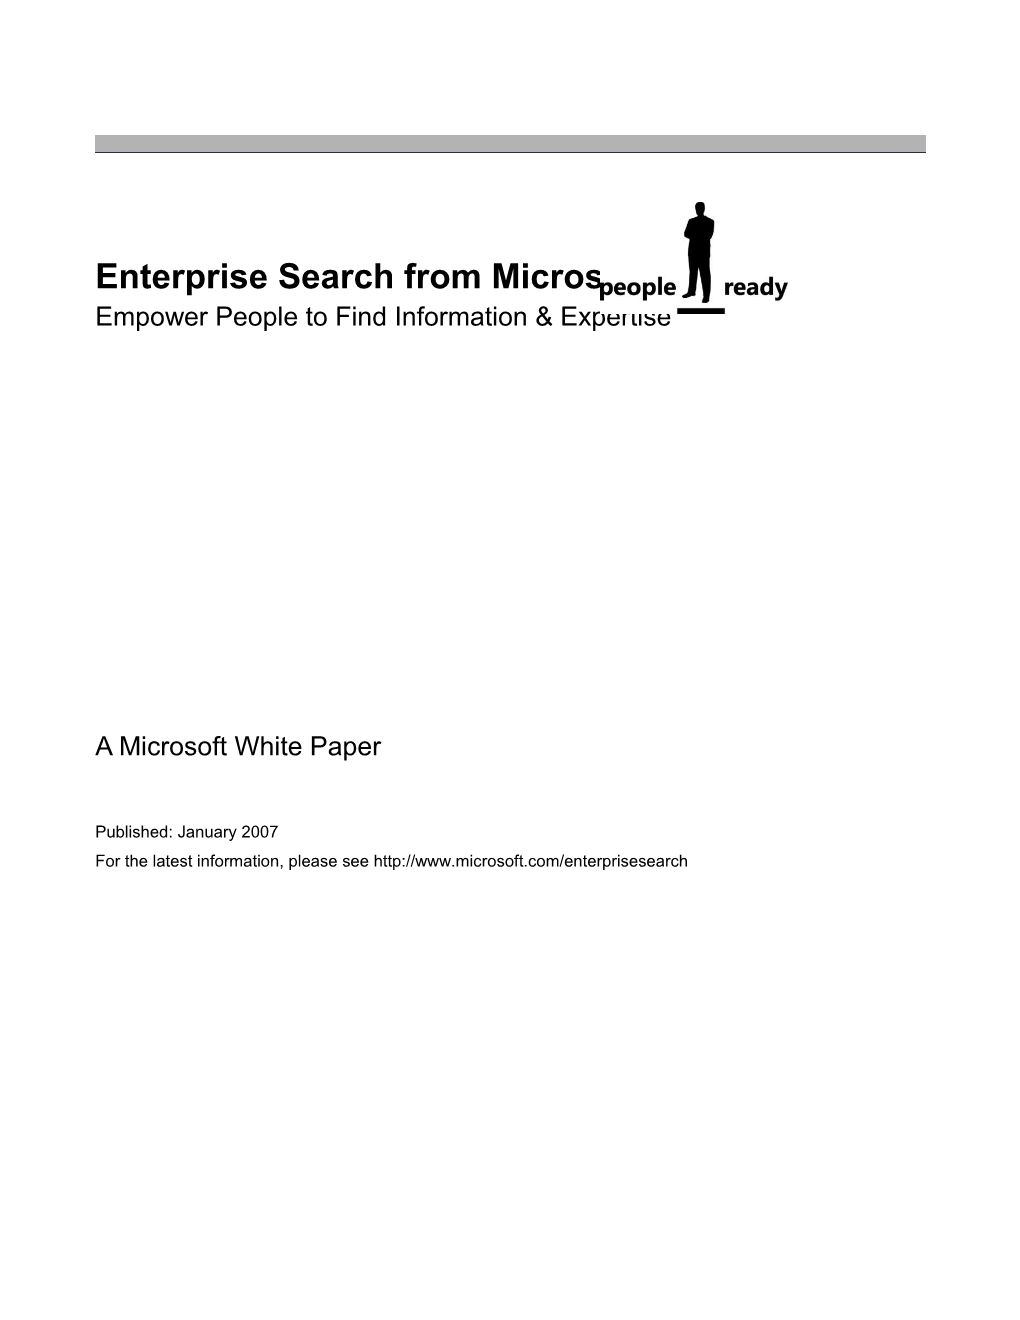 Enterprise Search from Microsoft White Paper